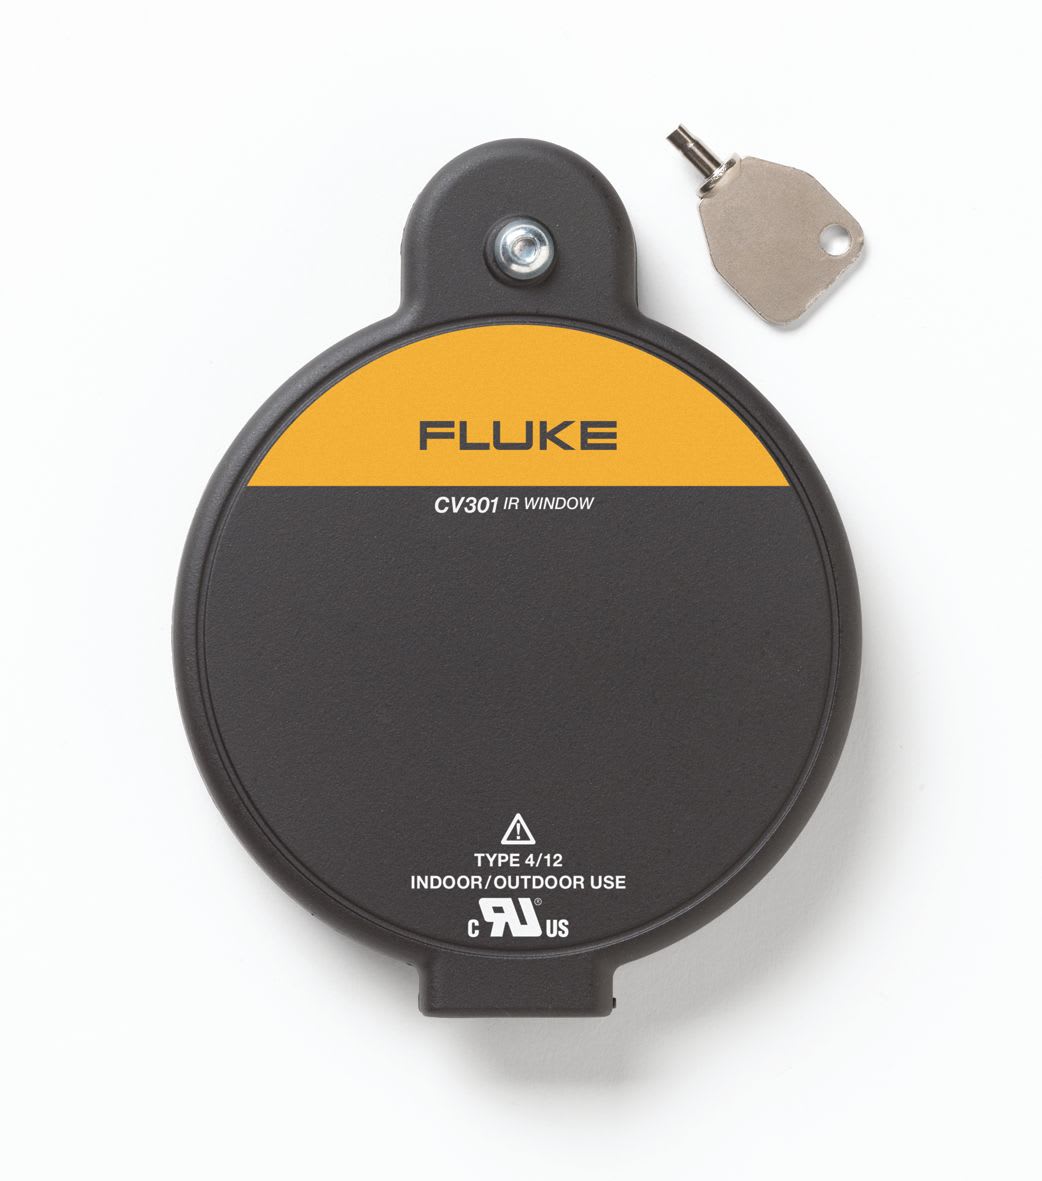 Fluke - FLUKE-CV301 HubLot infrarouge 75 mm, loquet a cle de securite